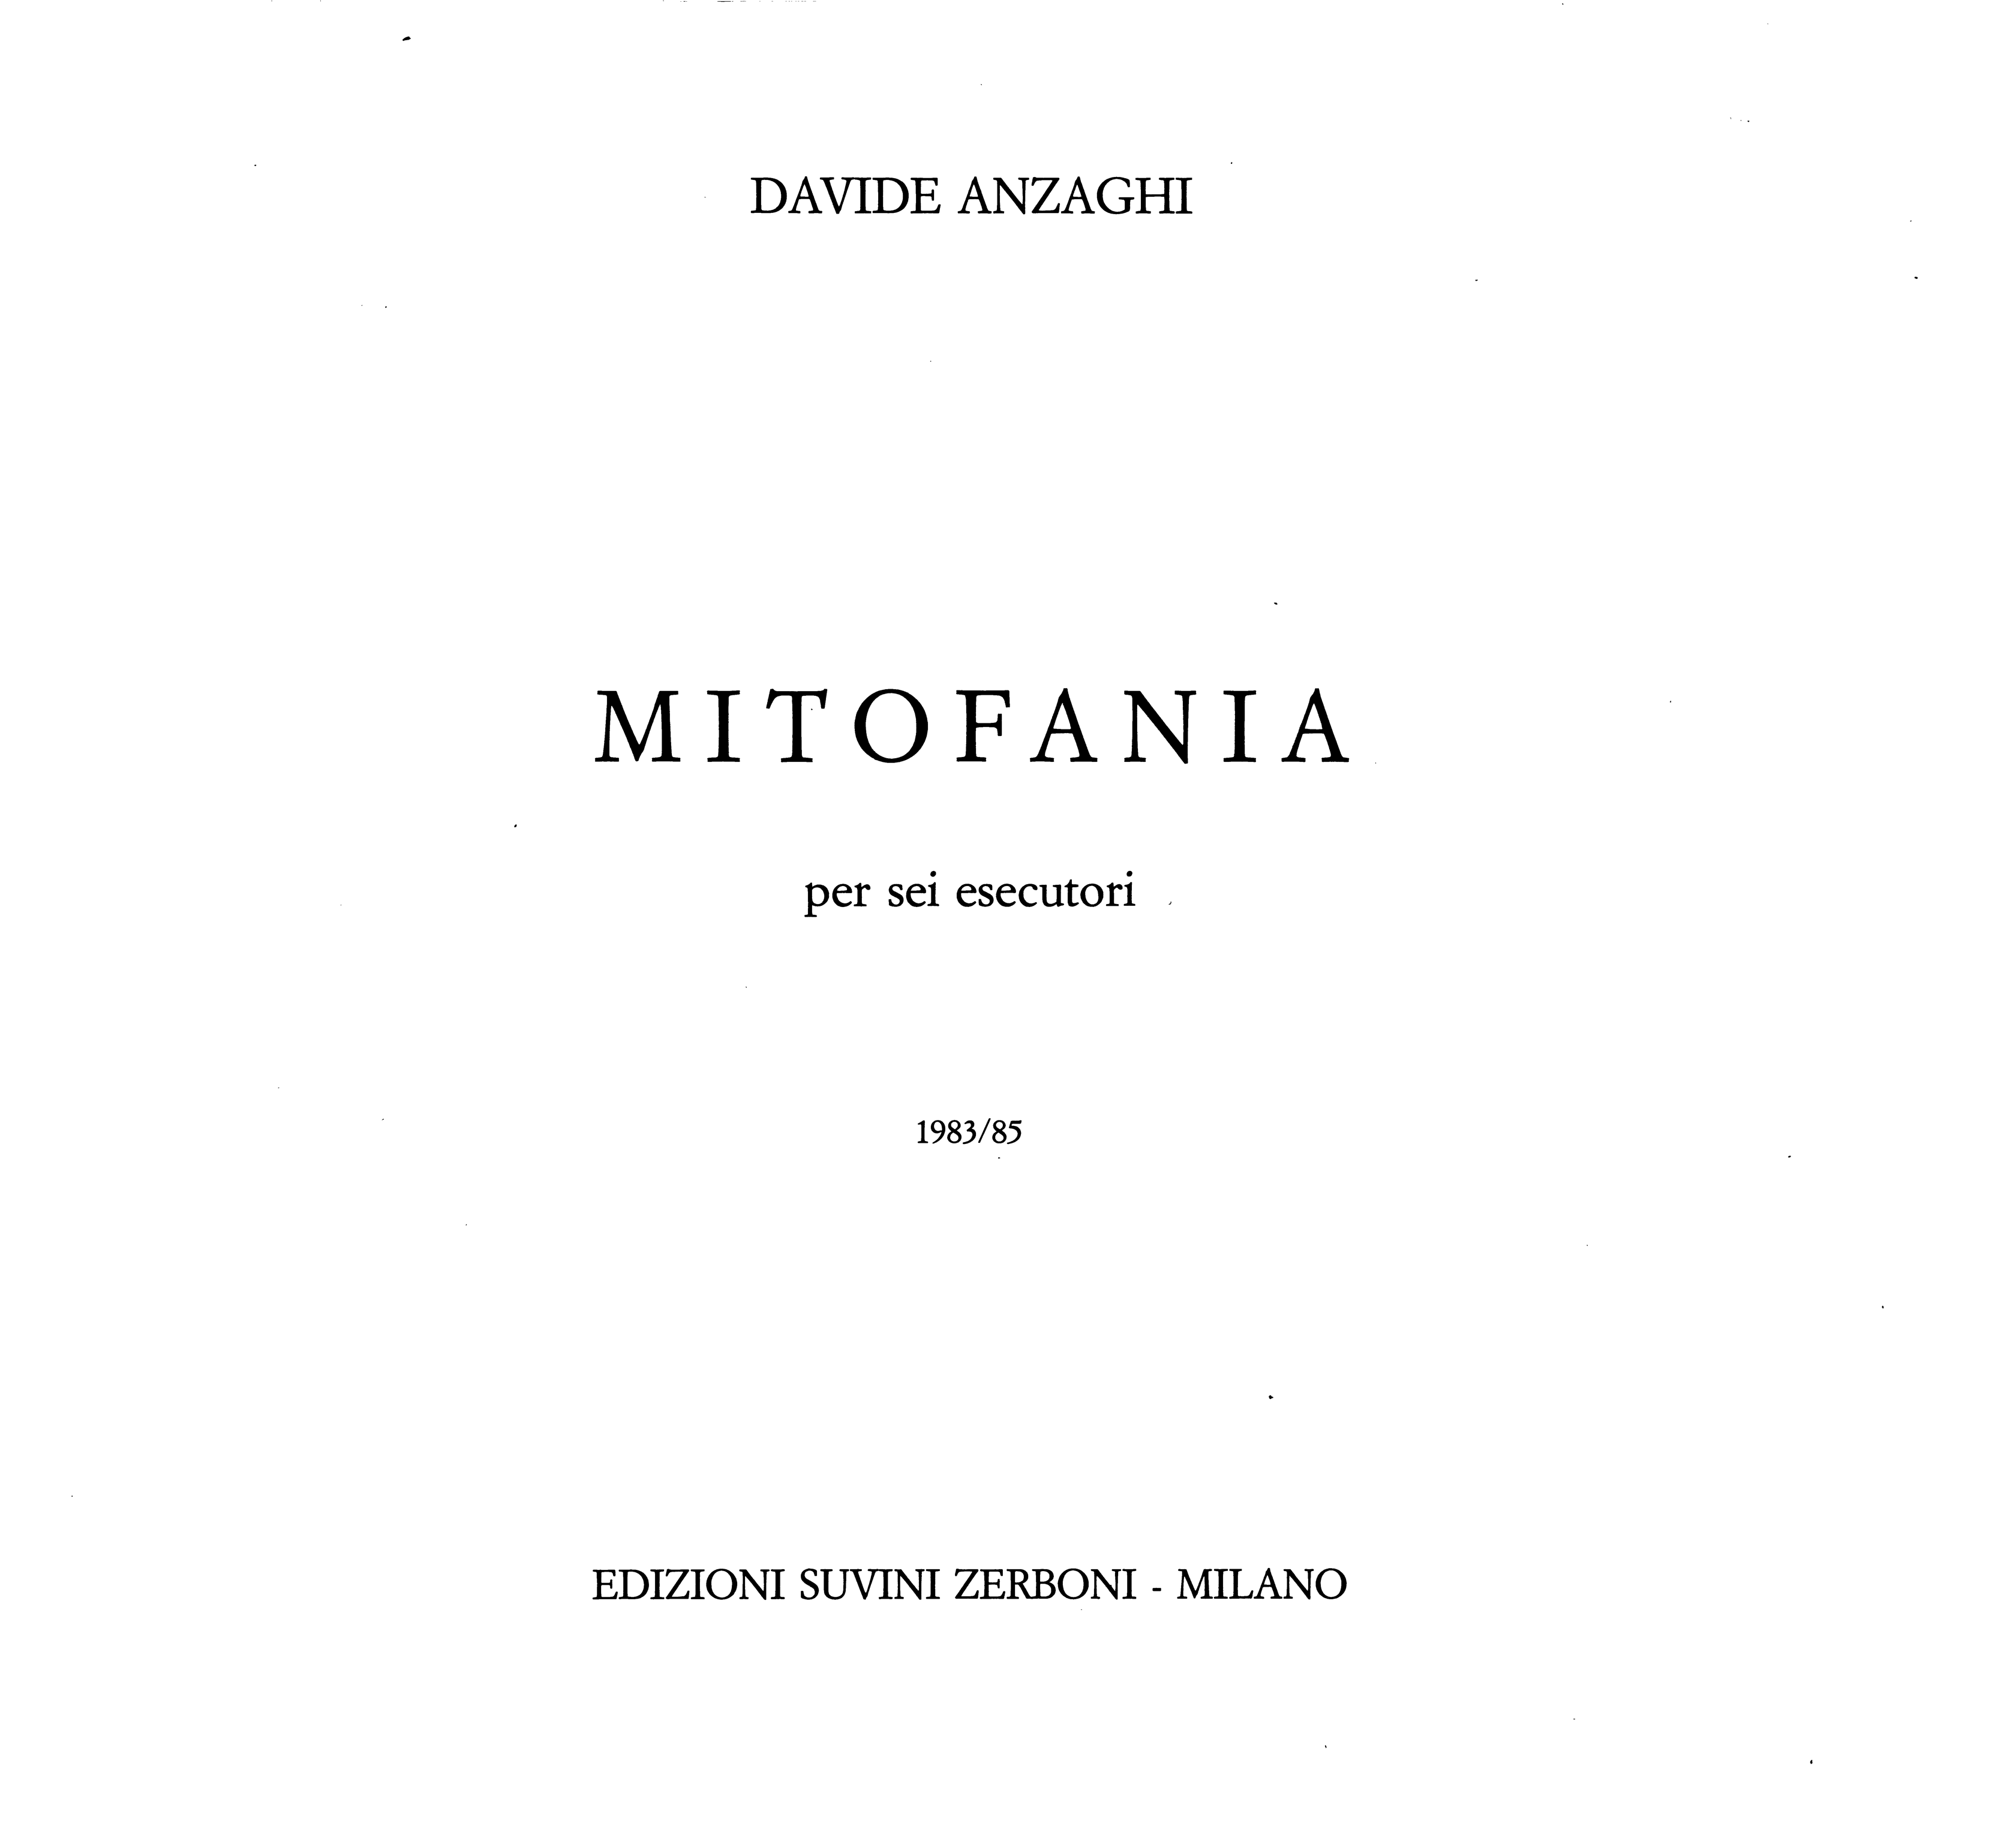 Mitofania_Anzaghi 1